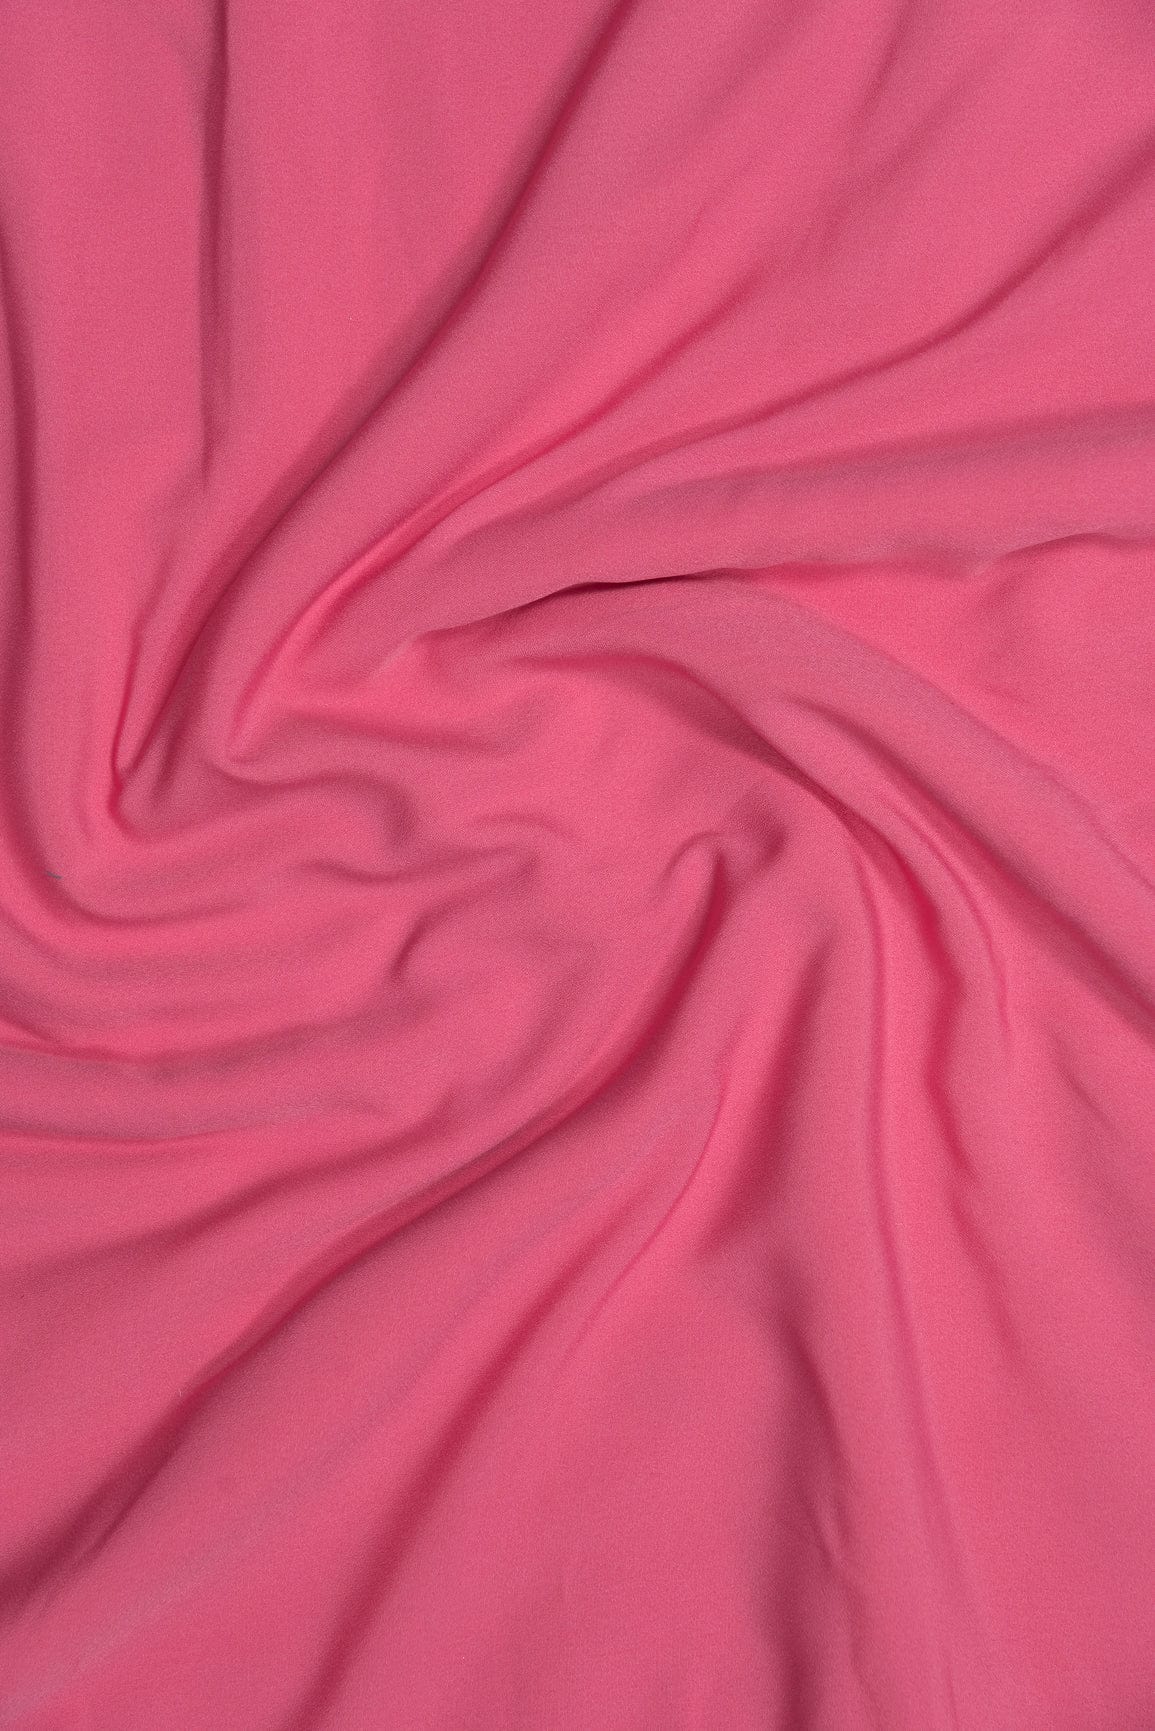 doeraa Plain Fabrics Pink Dyed Crepe Fabric